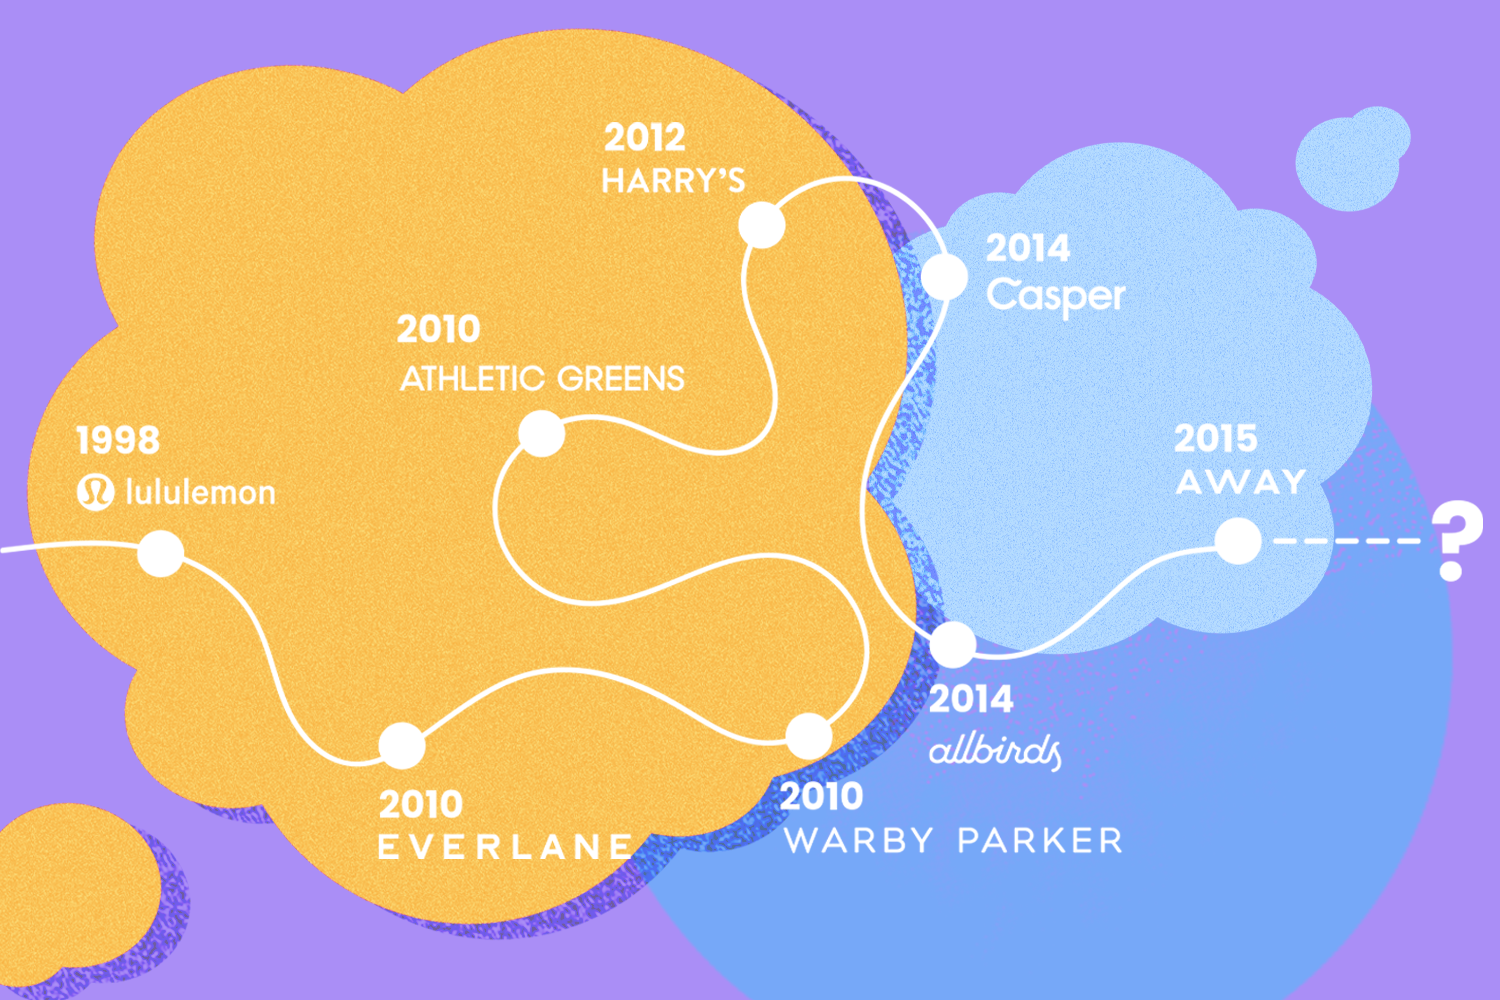 A warped timeline with DTC brands like Lulu Lemon, Everlane, Warby Parker, Athletic Greens, Harry's, Allbirds, Casper, and Away on a purple background